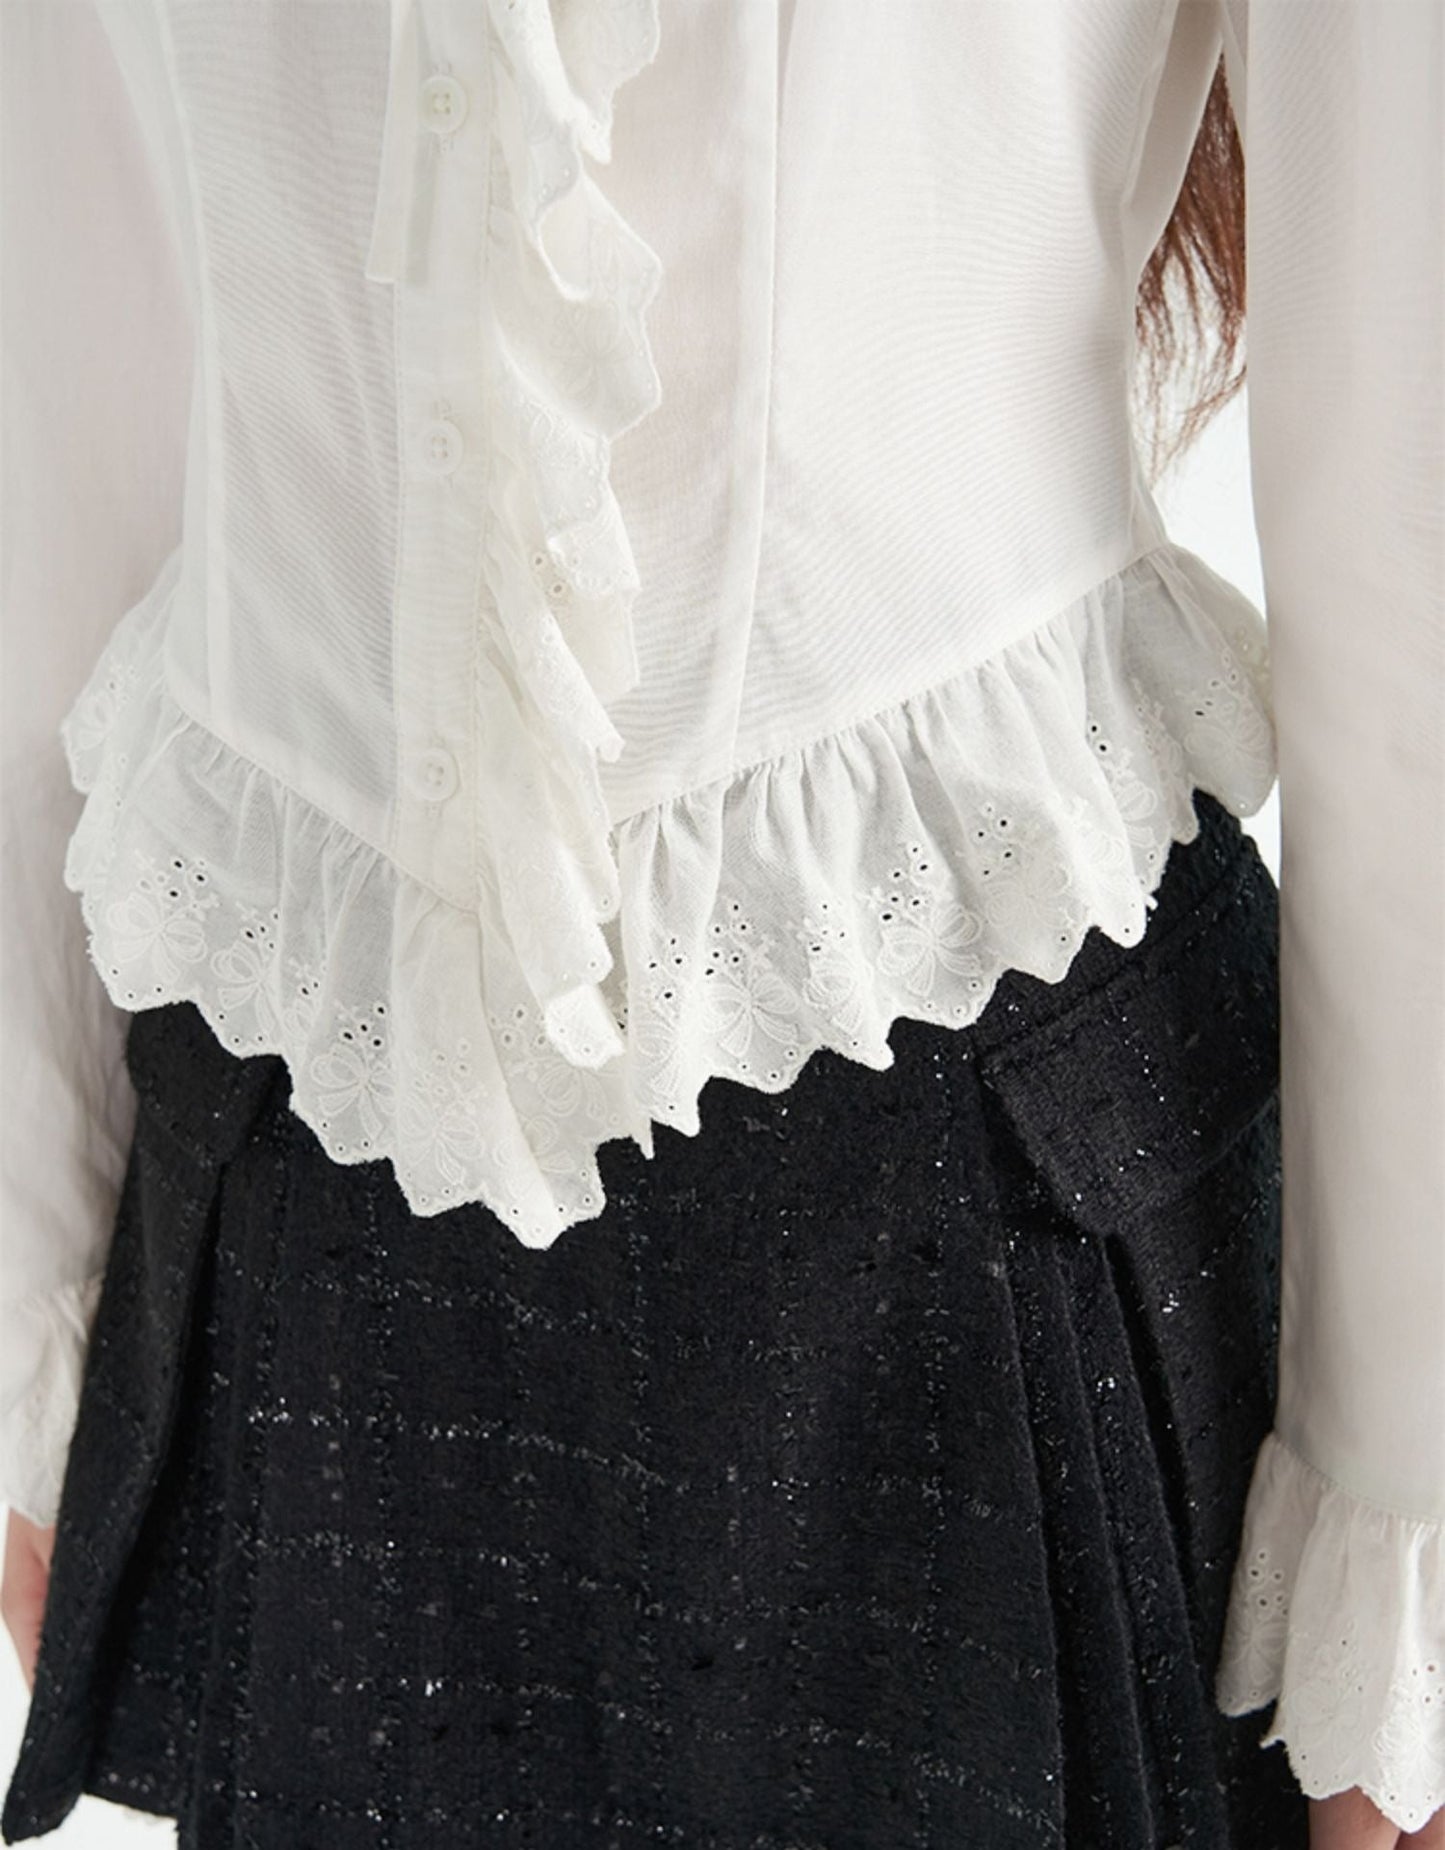 White V-neck lace Shirt